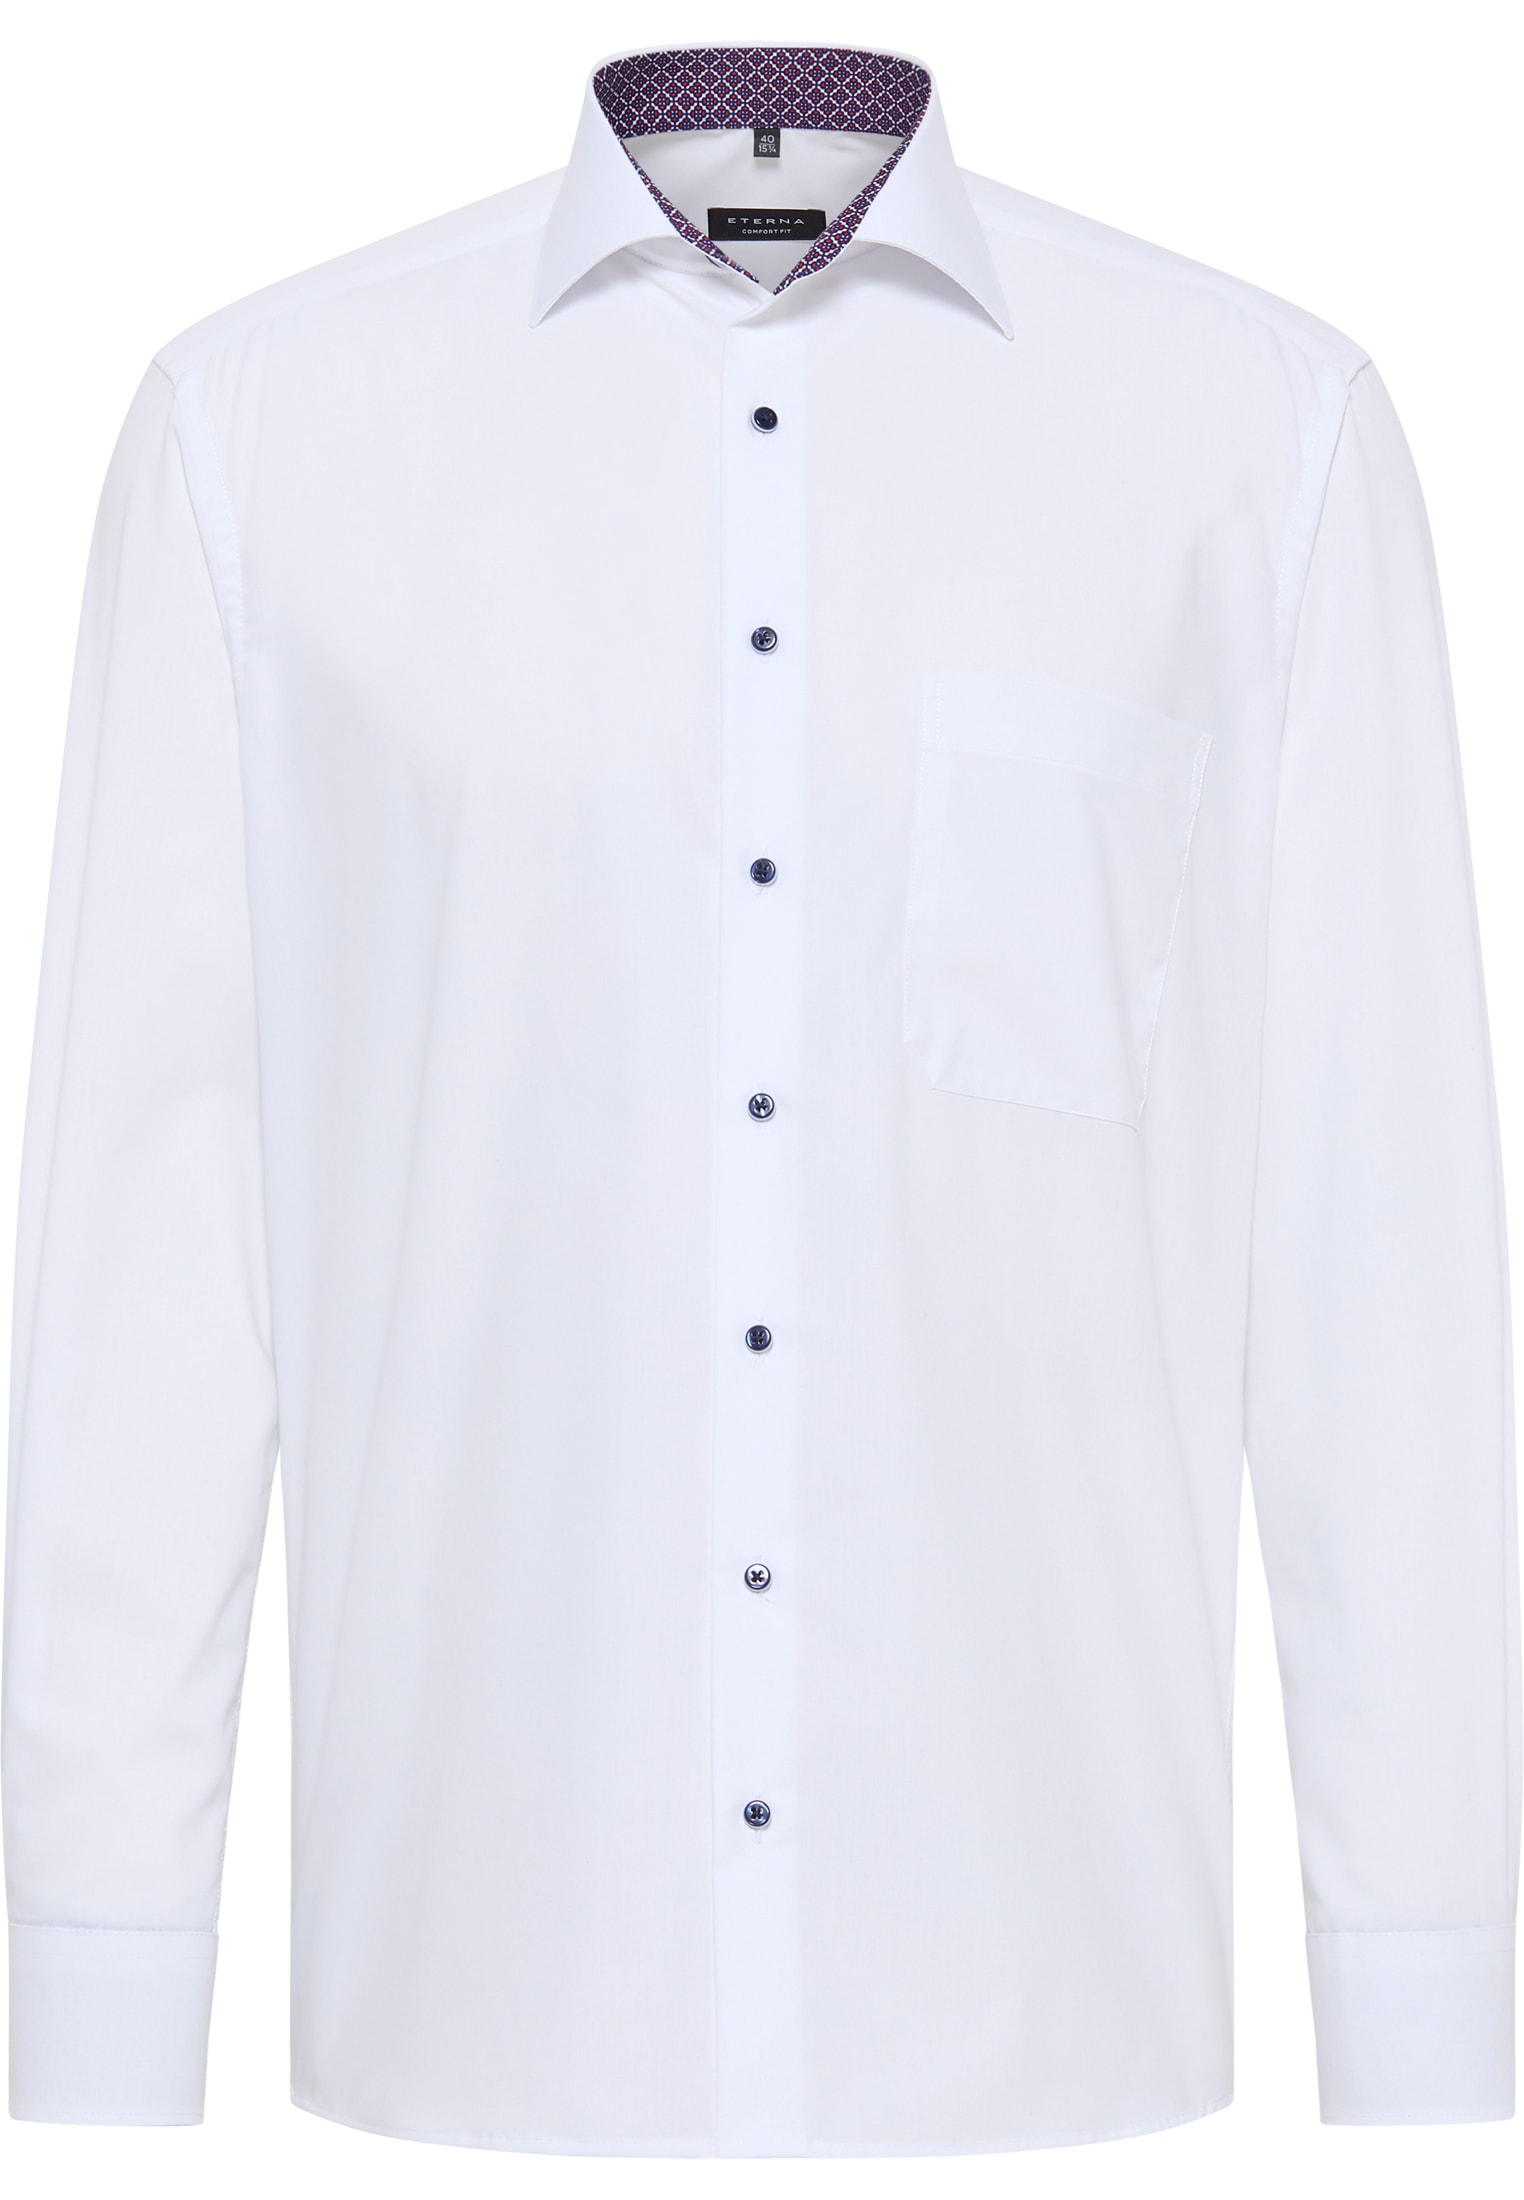 COMFORT FIT Original Shirt in white plain | white | long sleeve | 46 |  1SH11720-00-01-46-1/1